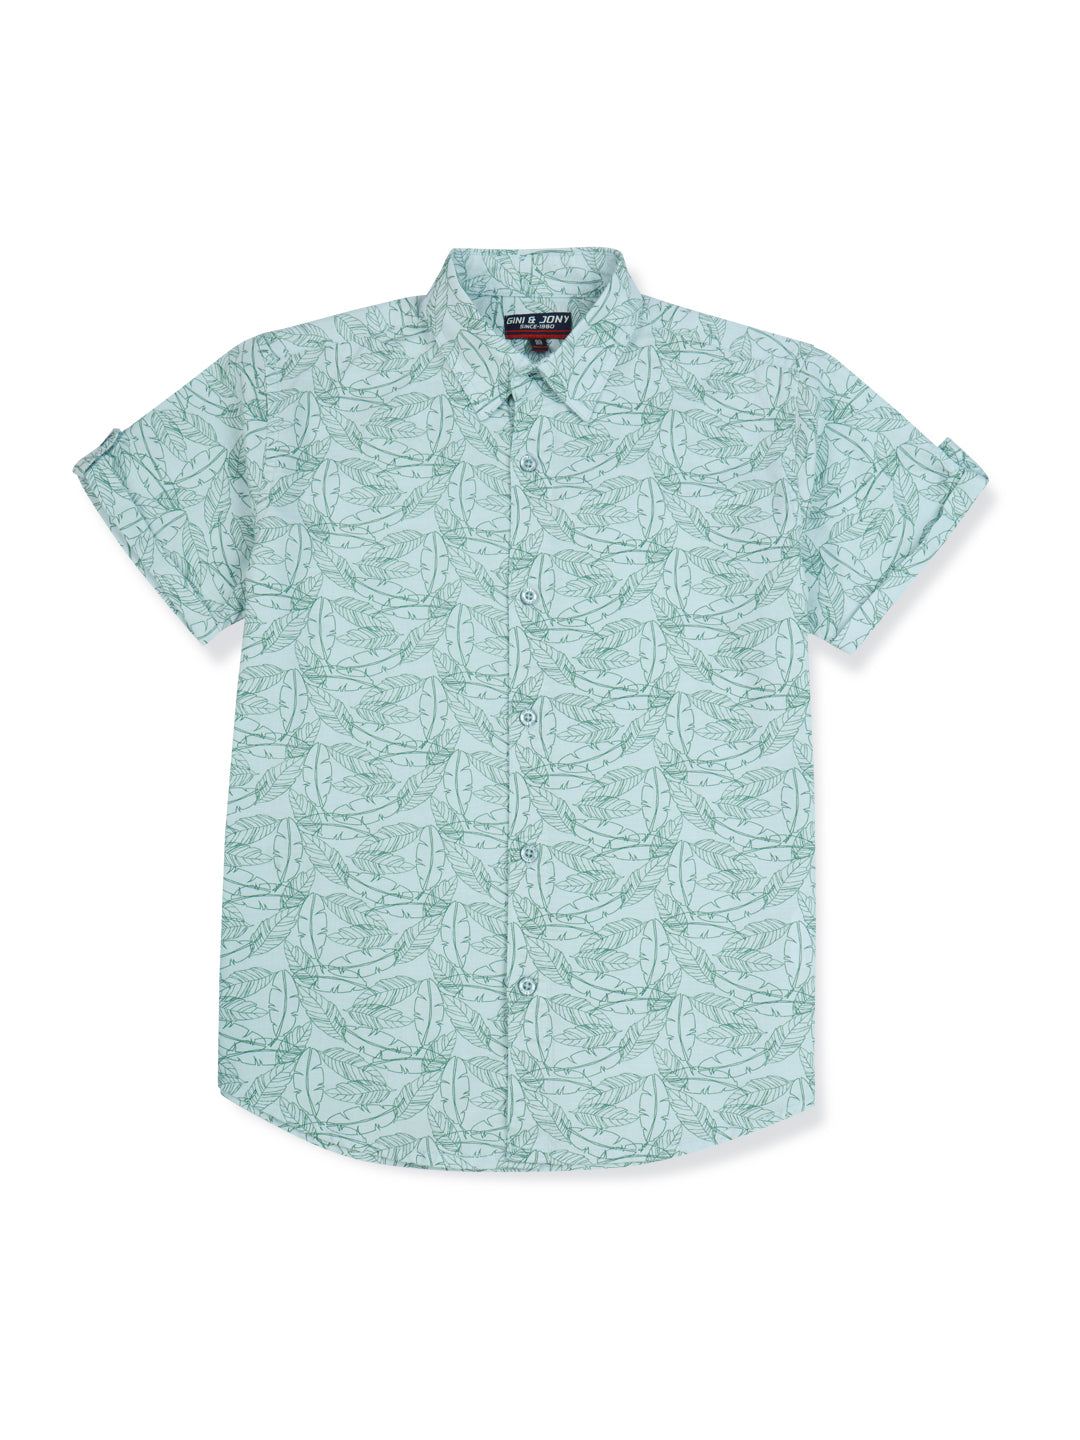 Boys Turquoise Cotton Printed Shirt